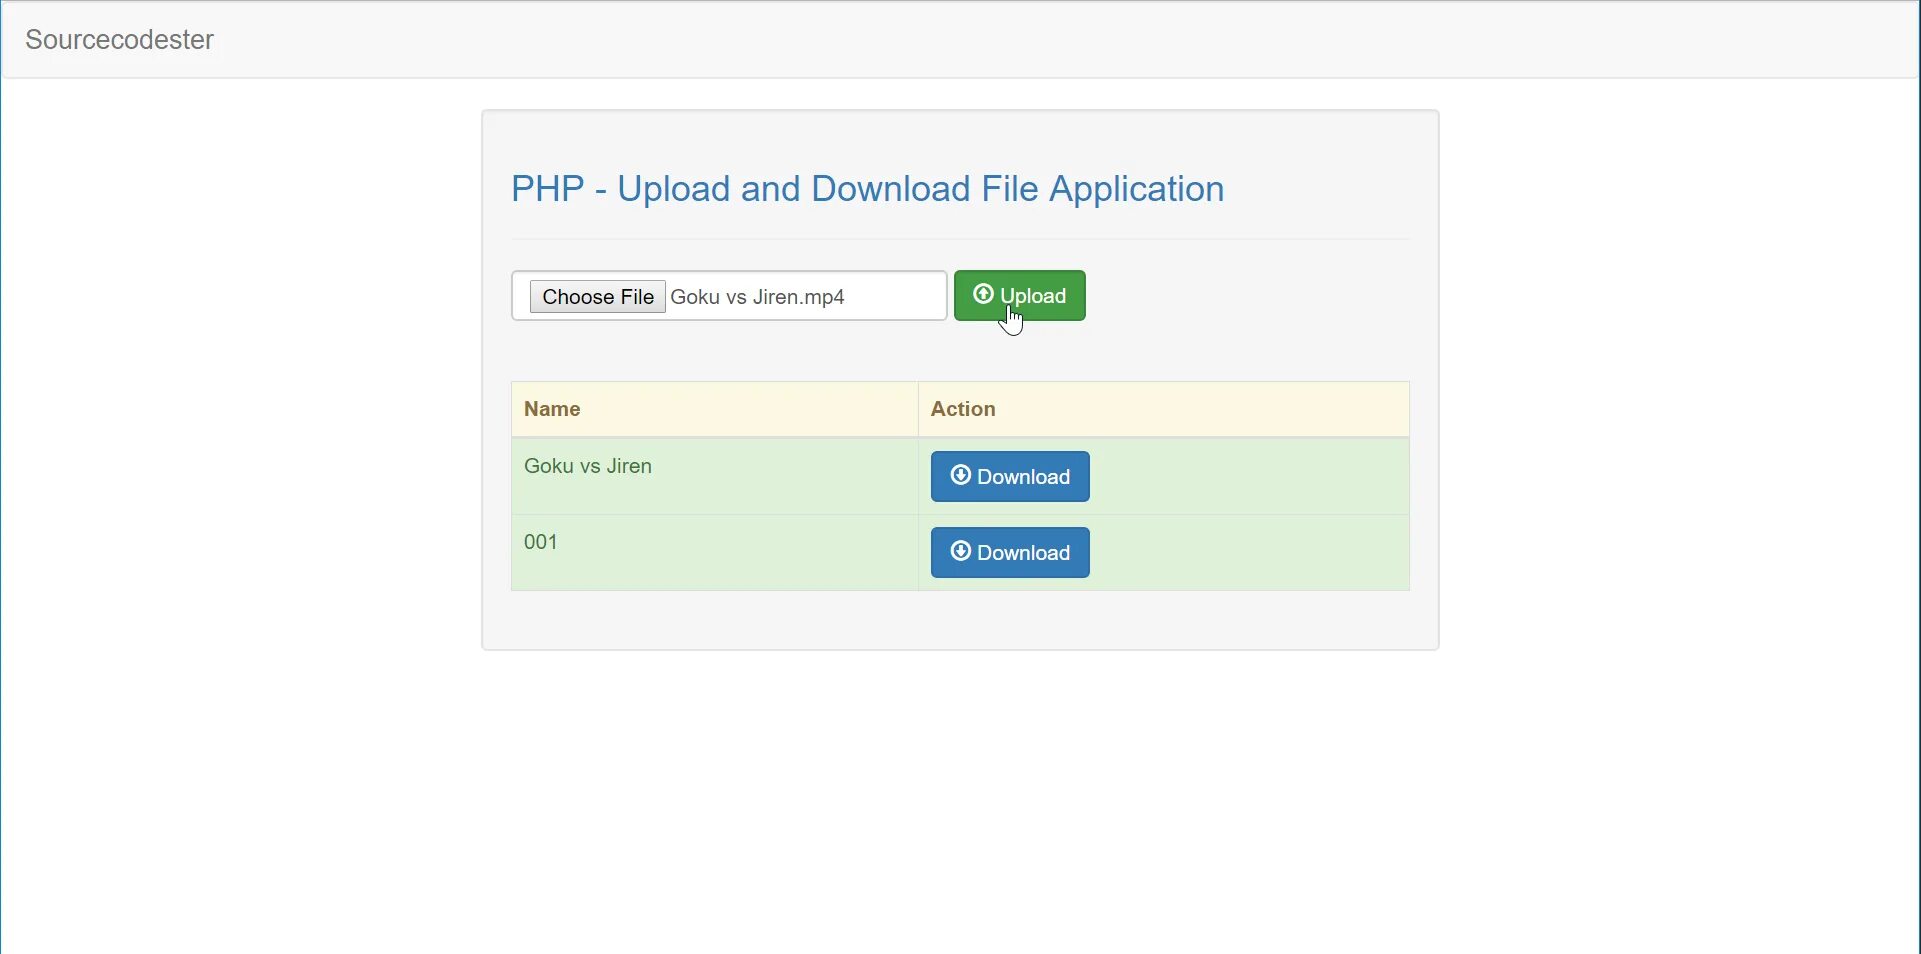 Order php id. Загрузка файлов на сервер php. Php файл. Php - upload and download file application. Скрипт загрузки файлов.